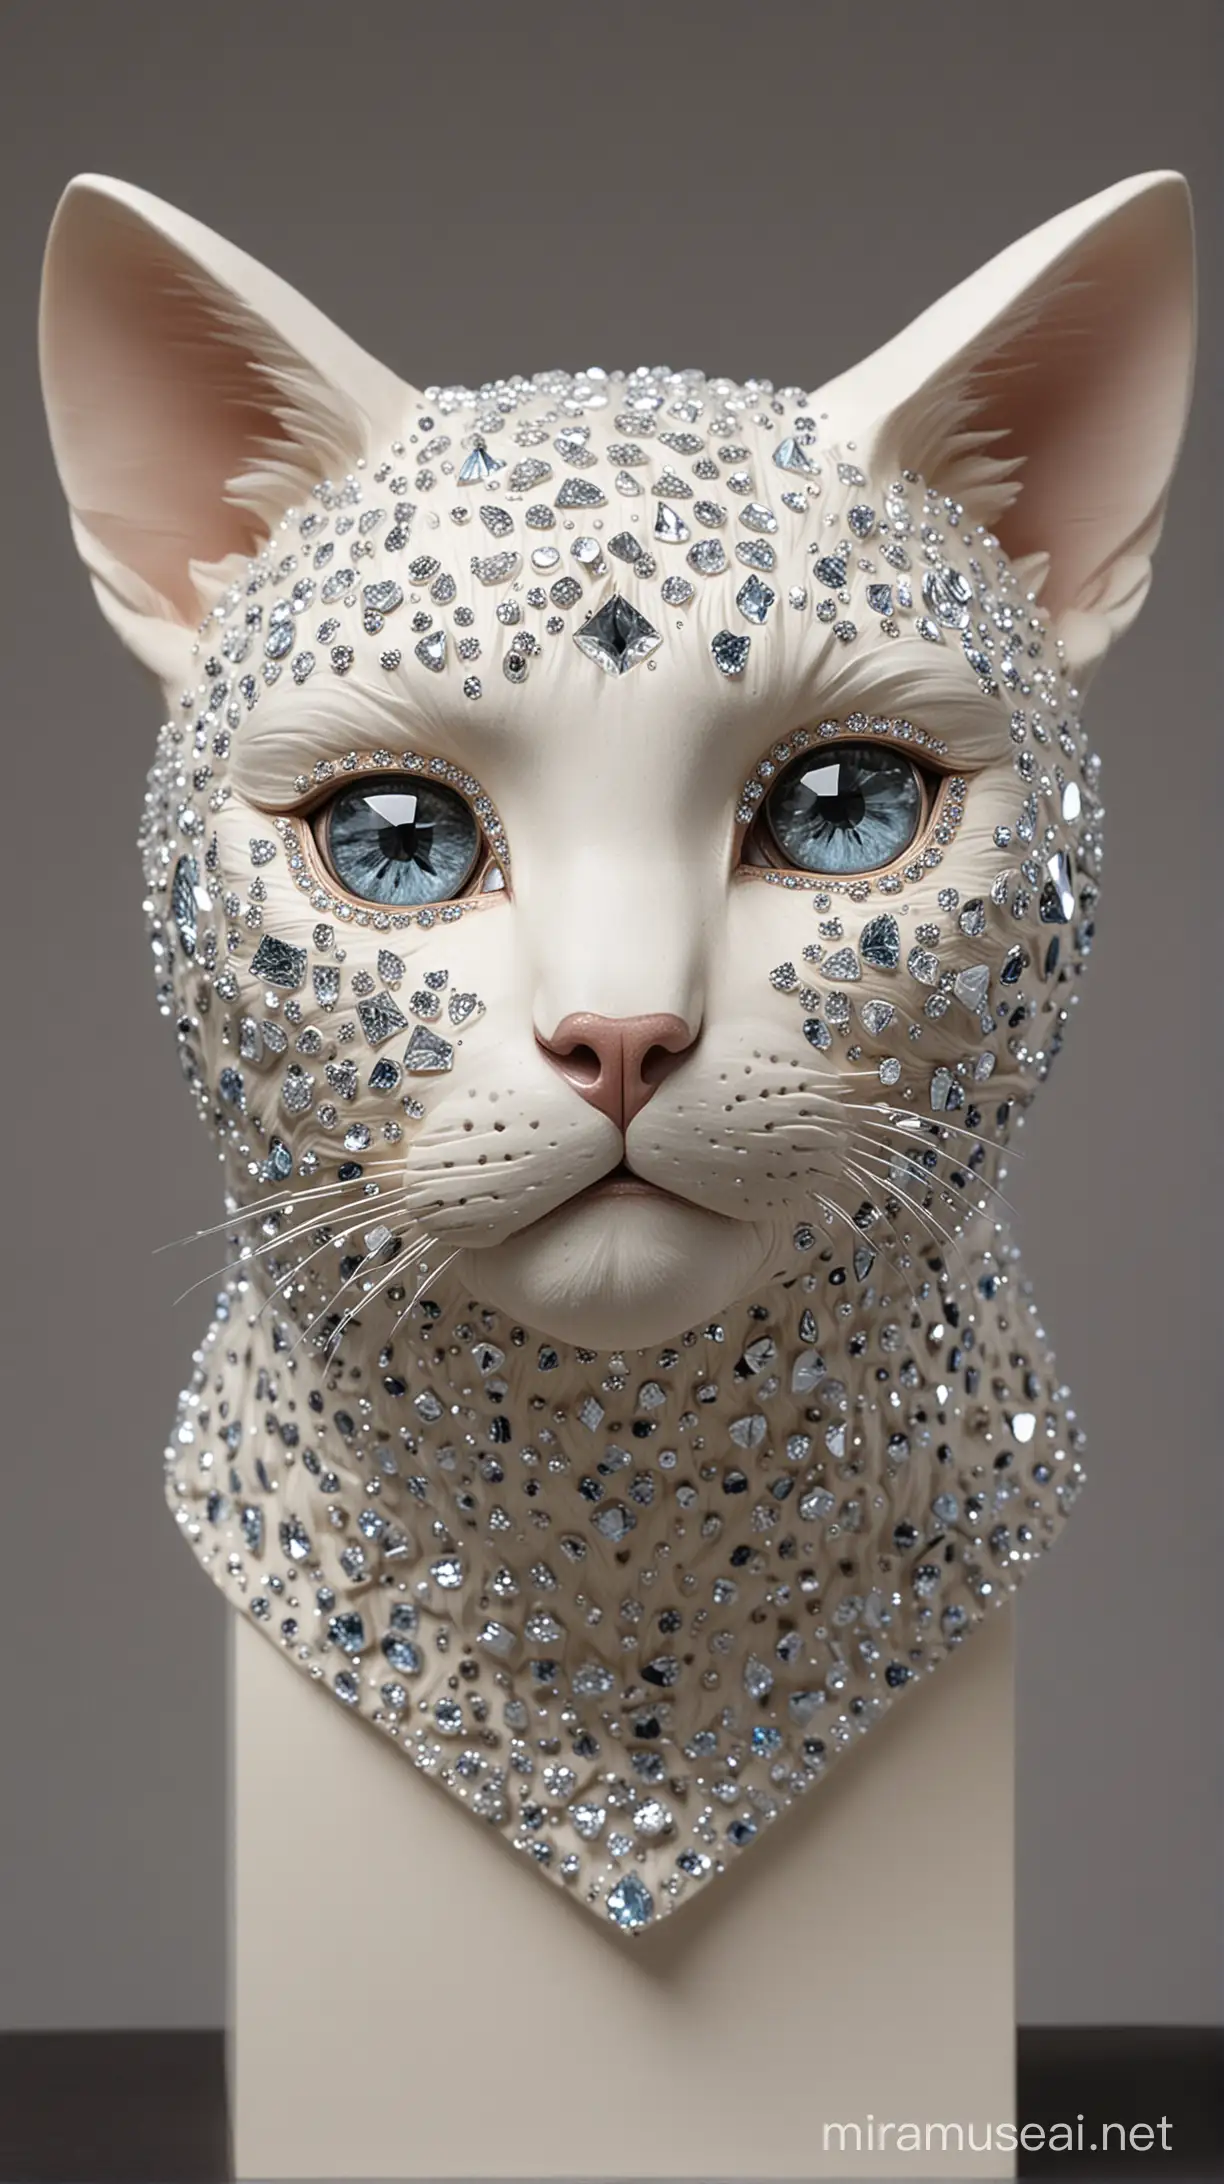 DiamondEncrusted Cat Sculpture Gazing at Camera